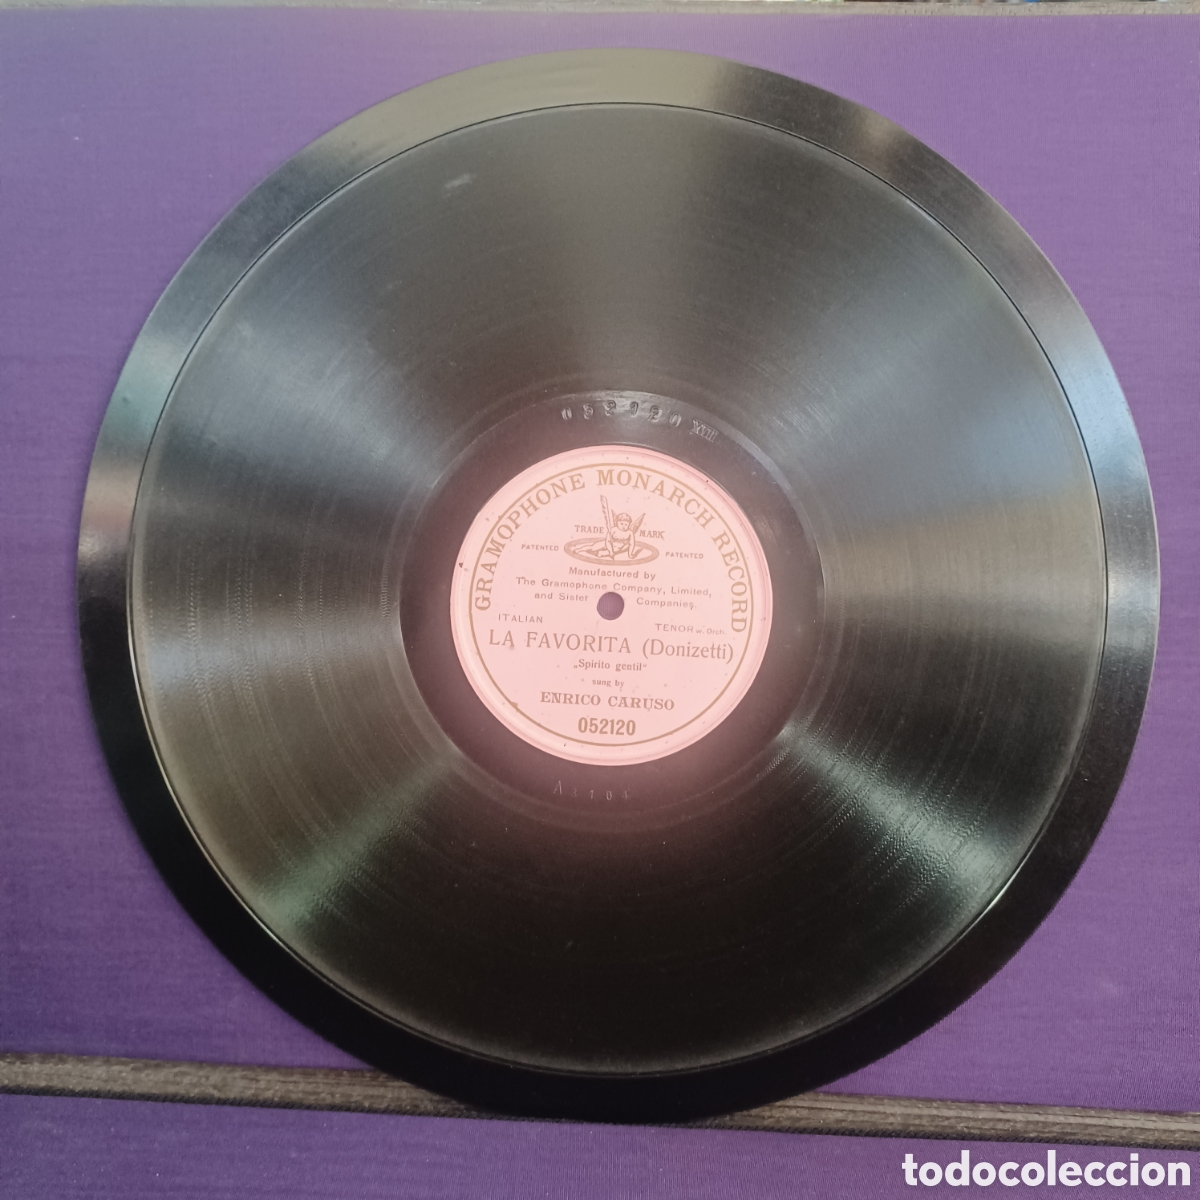 la favorita / enrico caruso - gramophone monarc - Buy Shellac records of  Classical Music